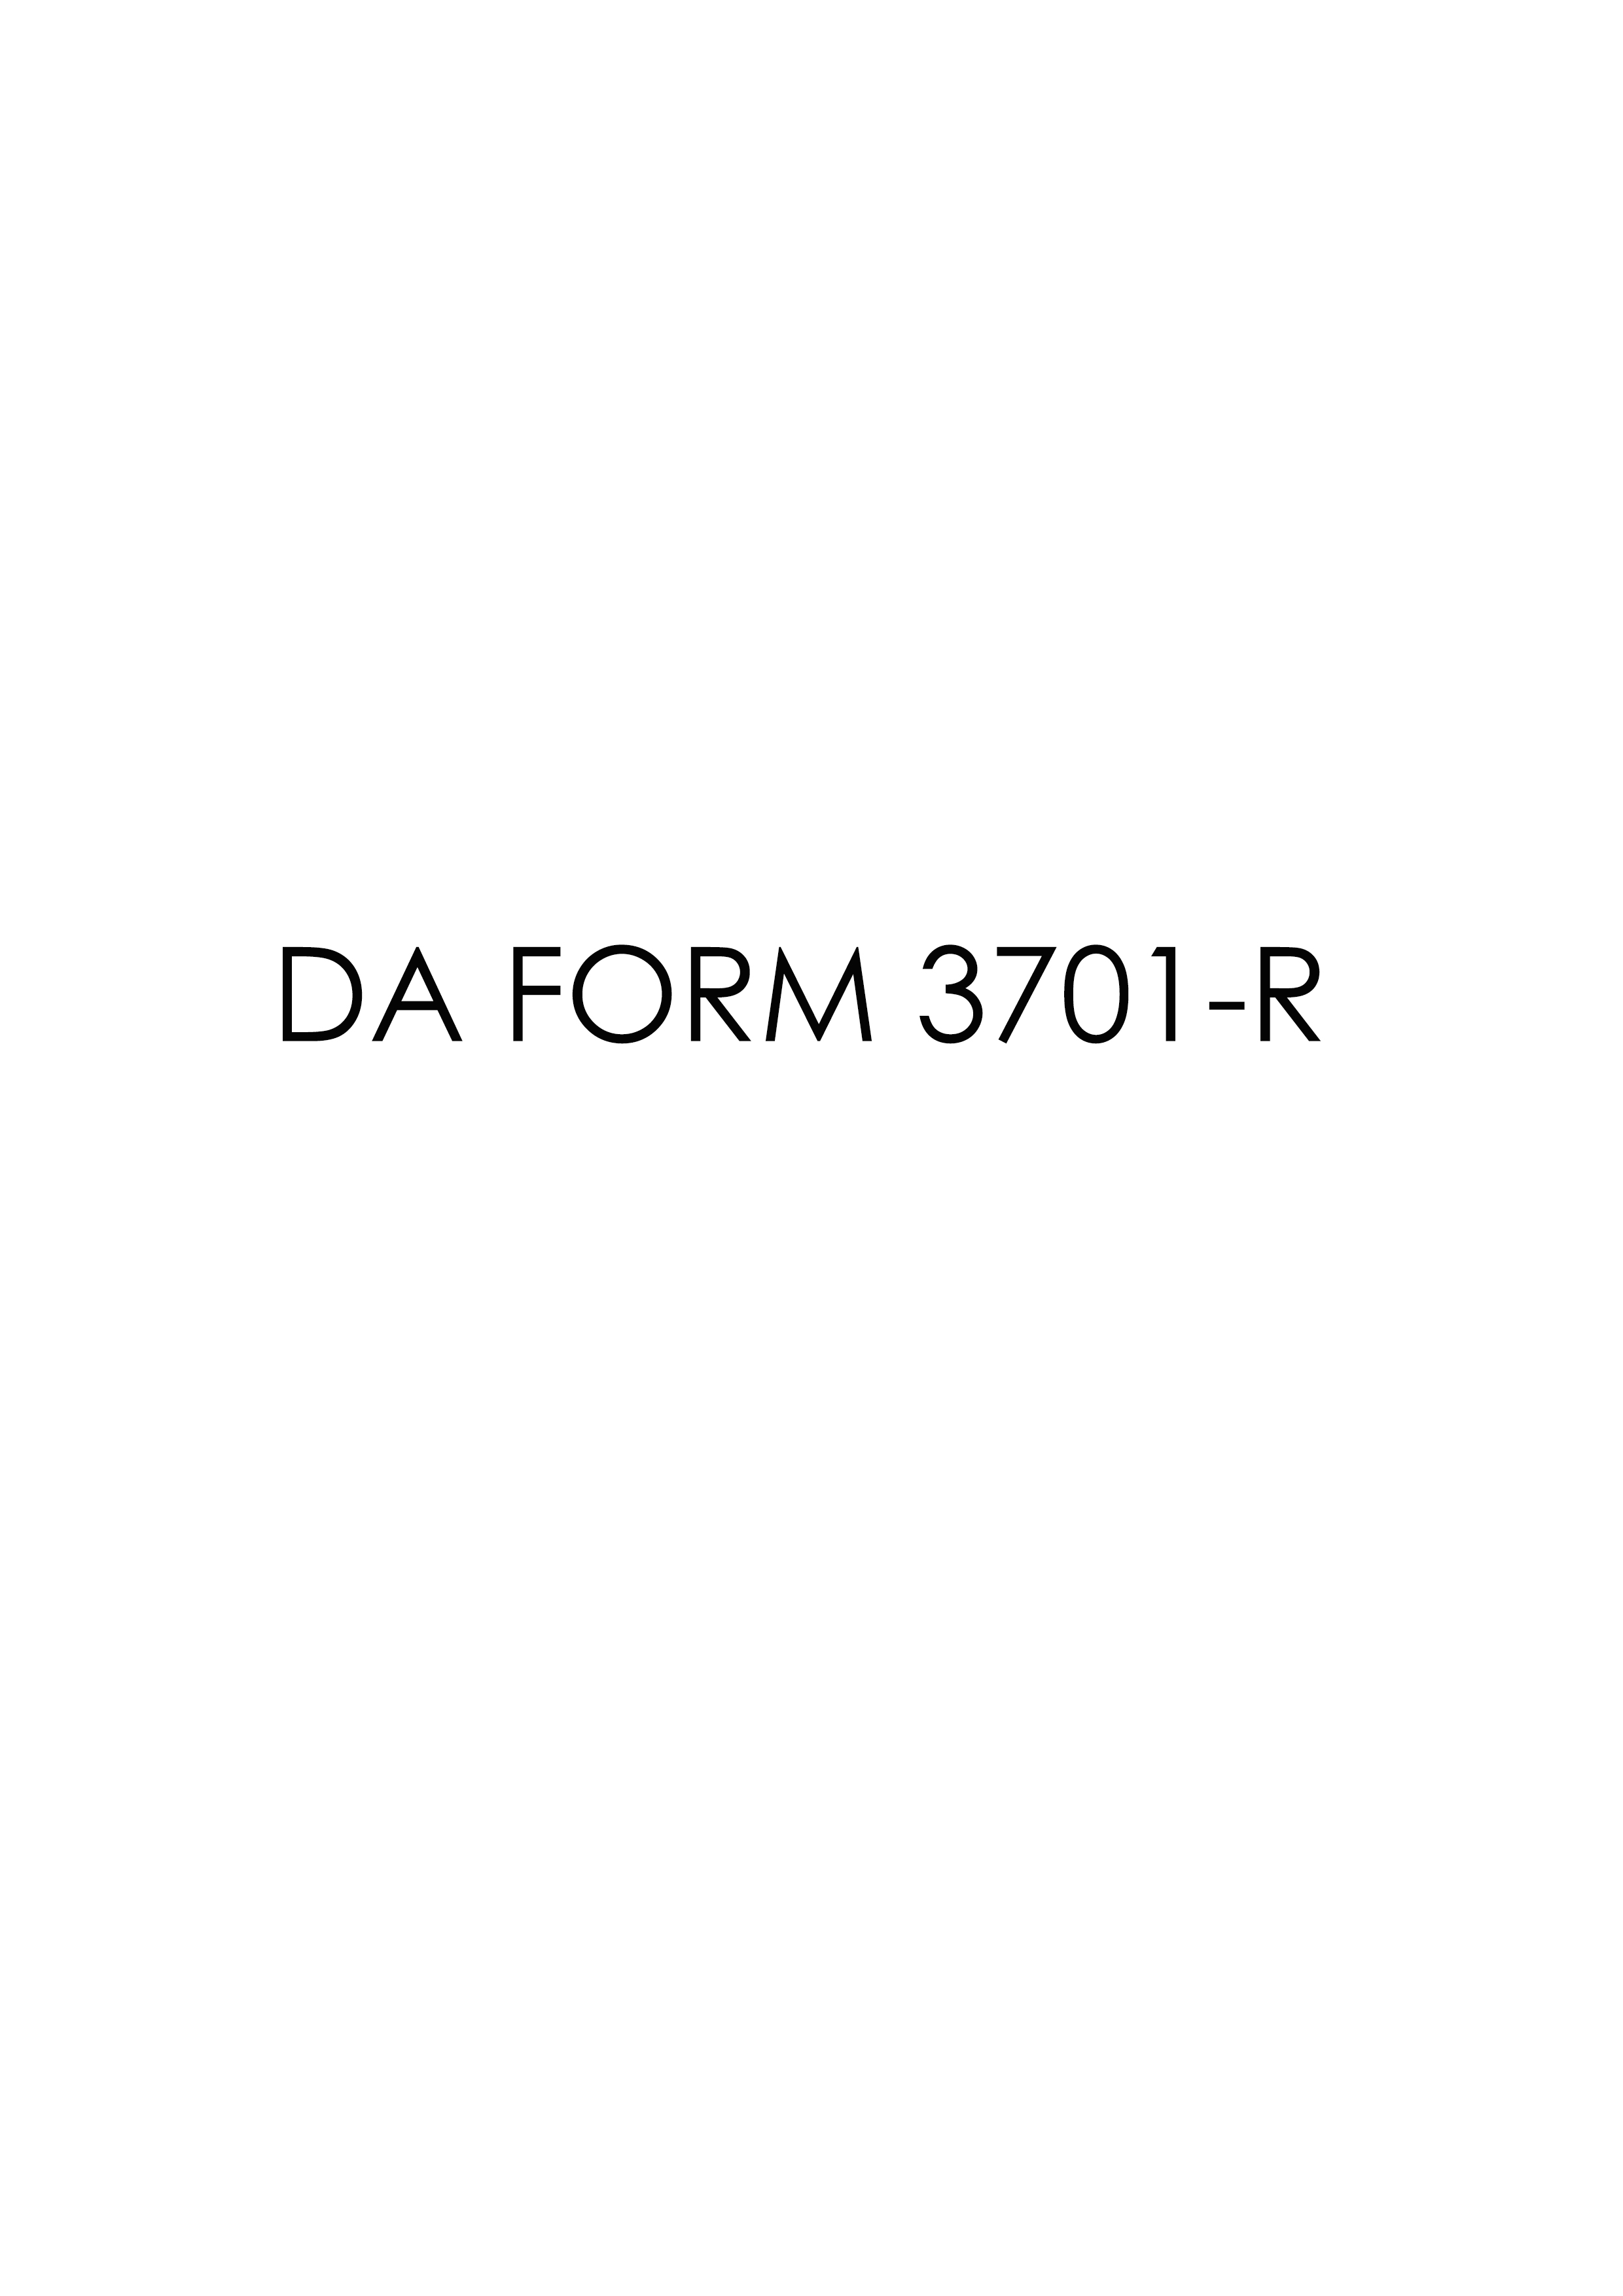 da Form 3701-R fillable